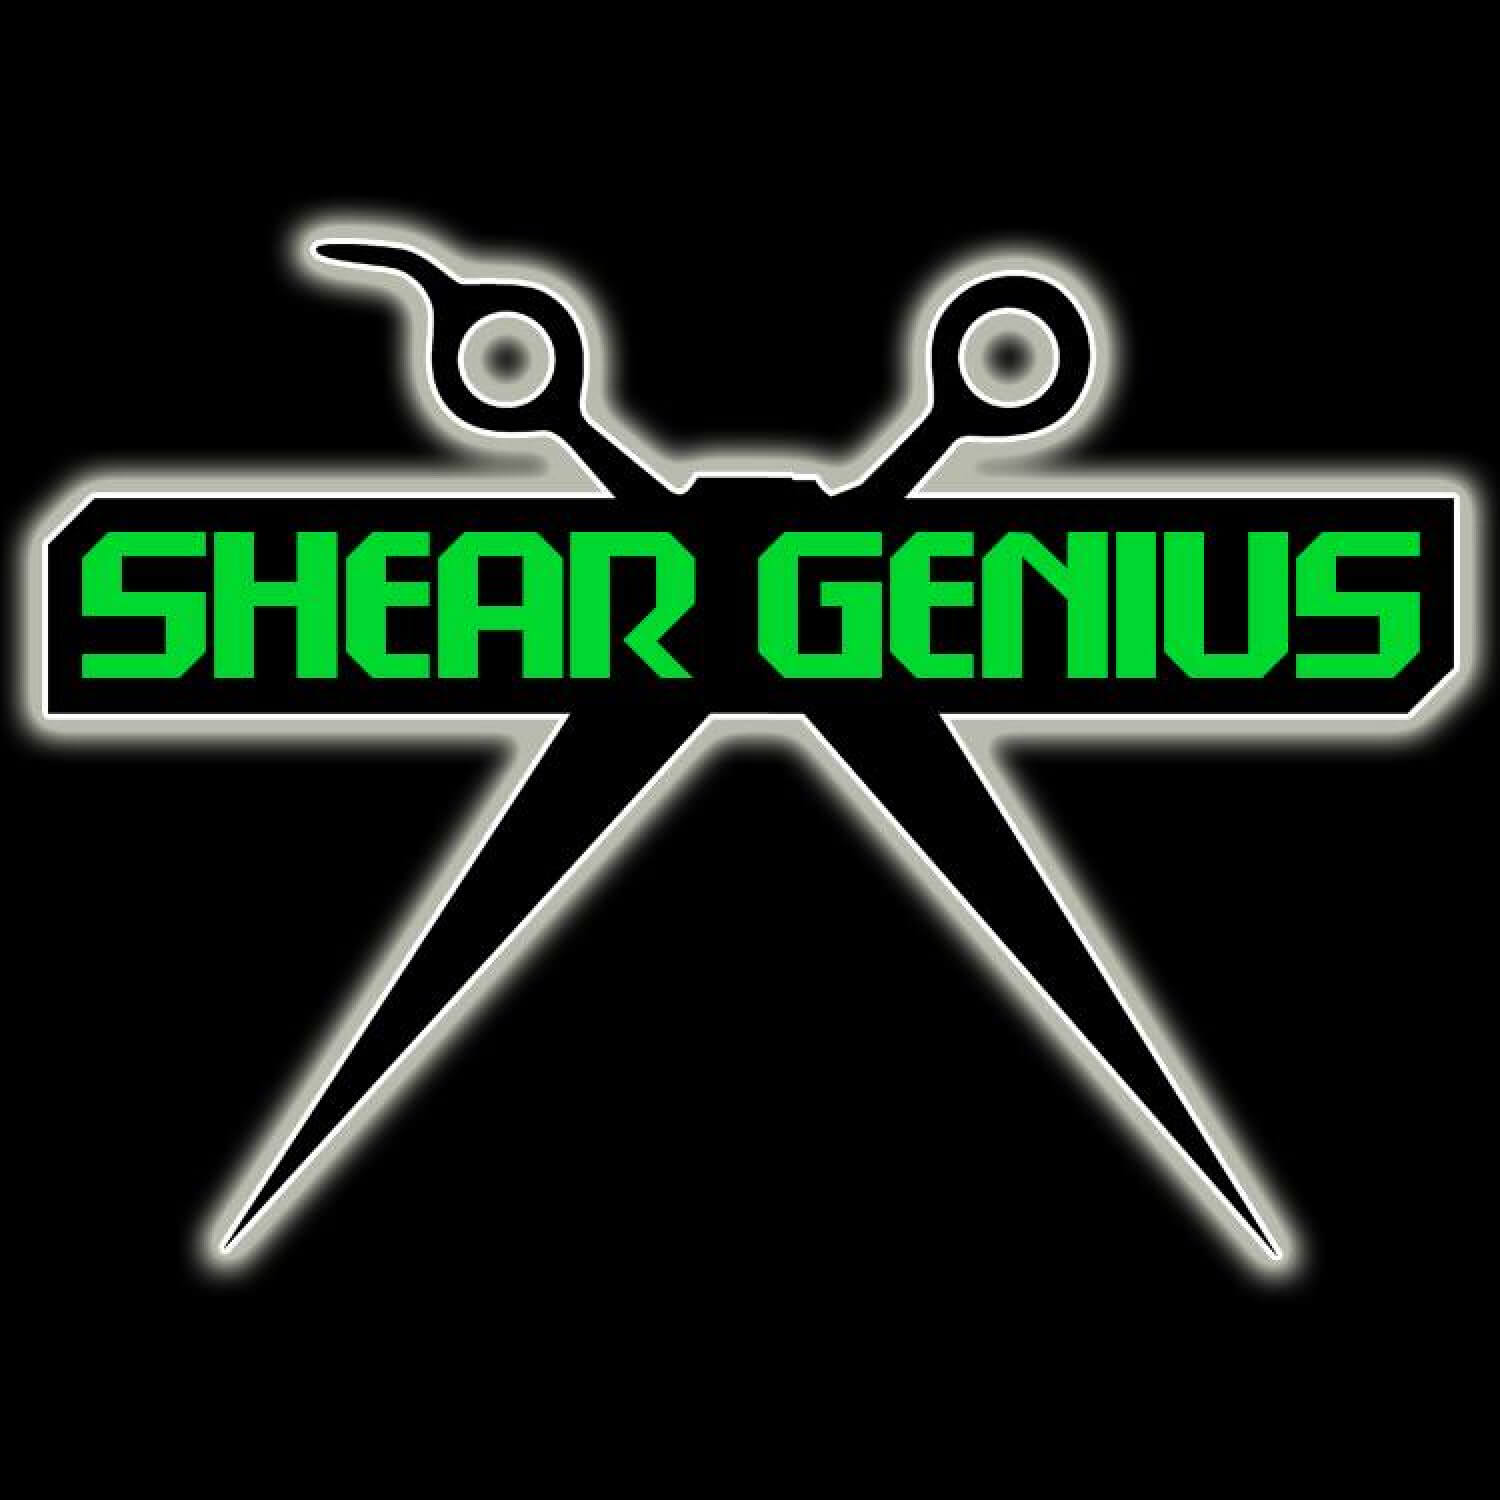 Shear Genius logo